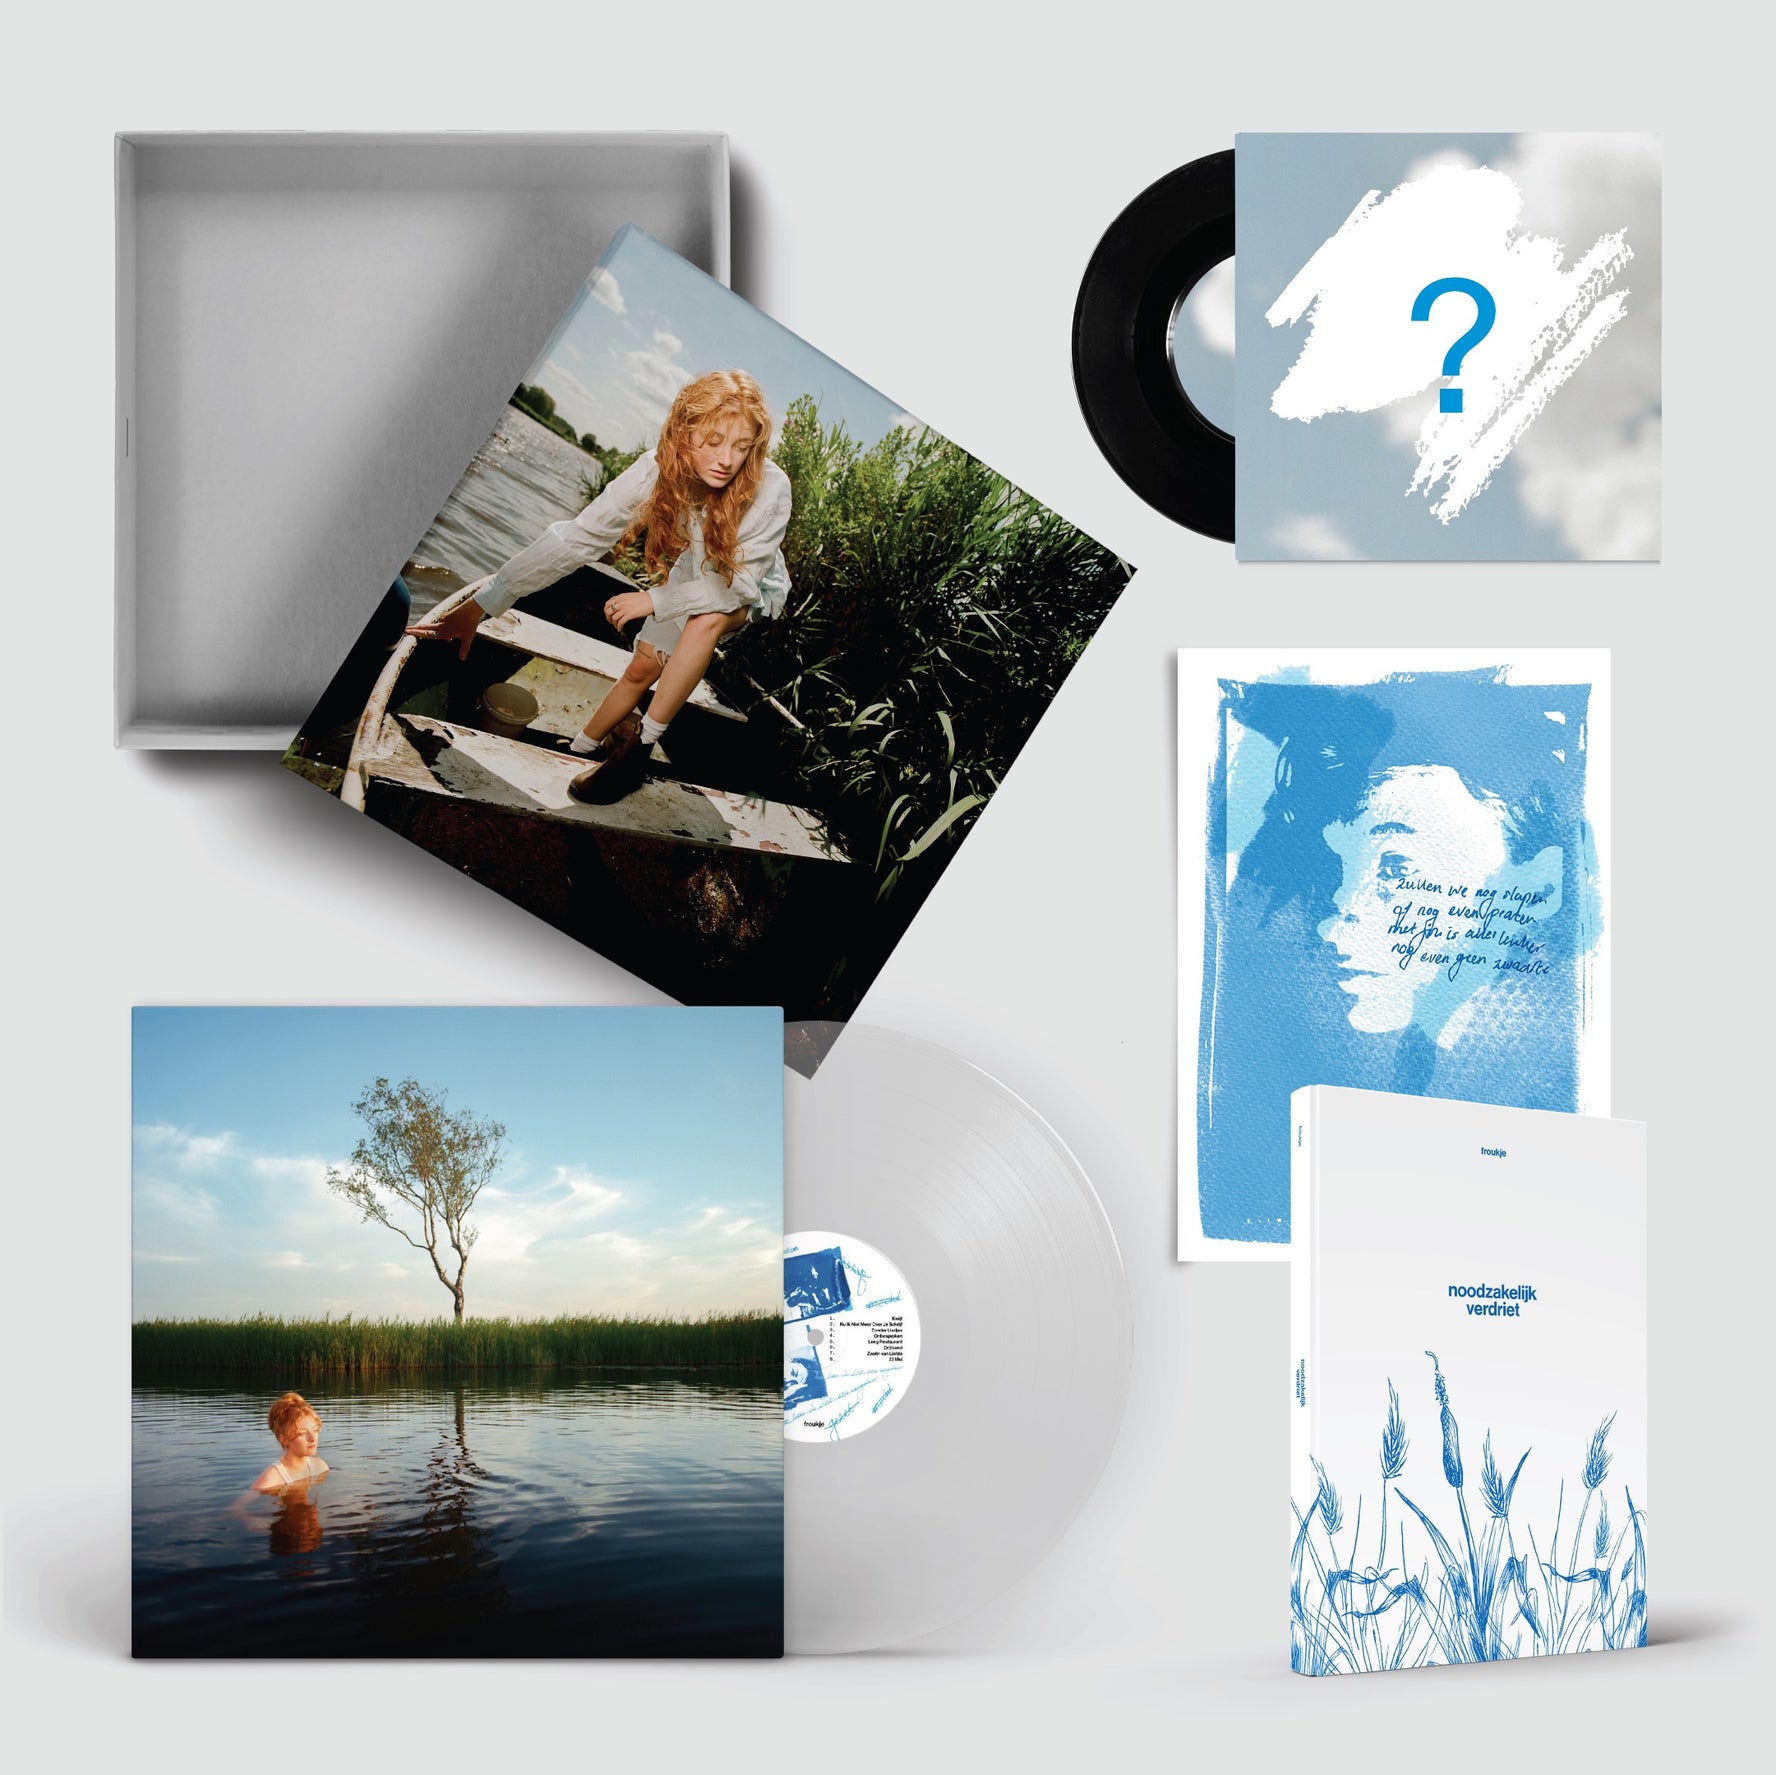 Noodzakelijk Verdriet (White LP+7Inch Single Deluxe Boxset)